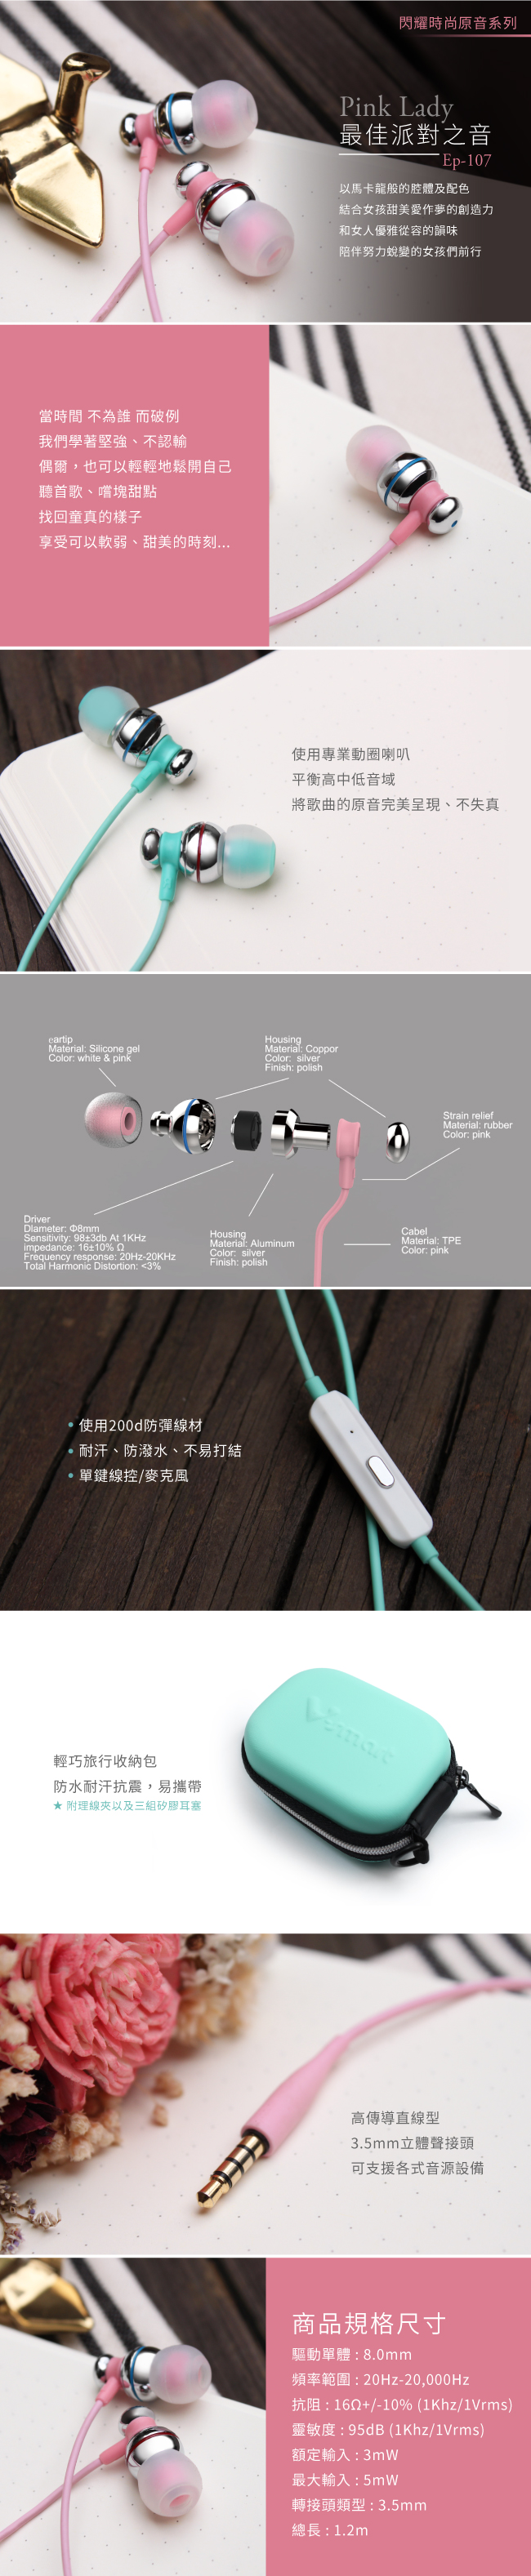 V-smart Pink Lady 高音質耳塞式耳機(贈耳塞*3+旅行收納盒+理線夾)